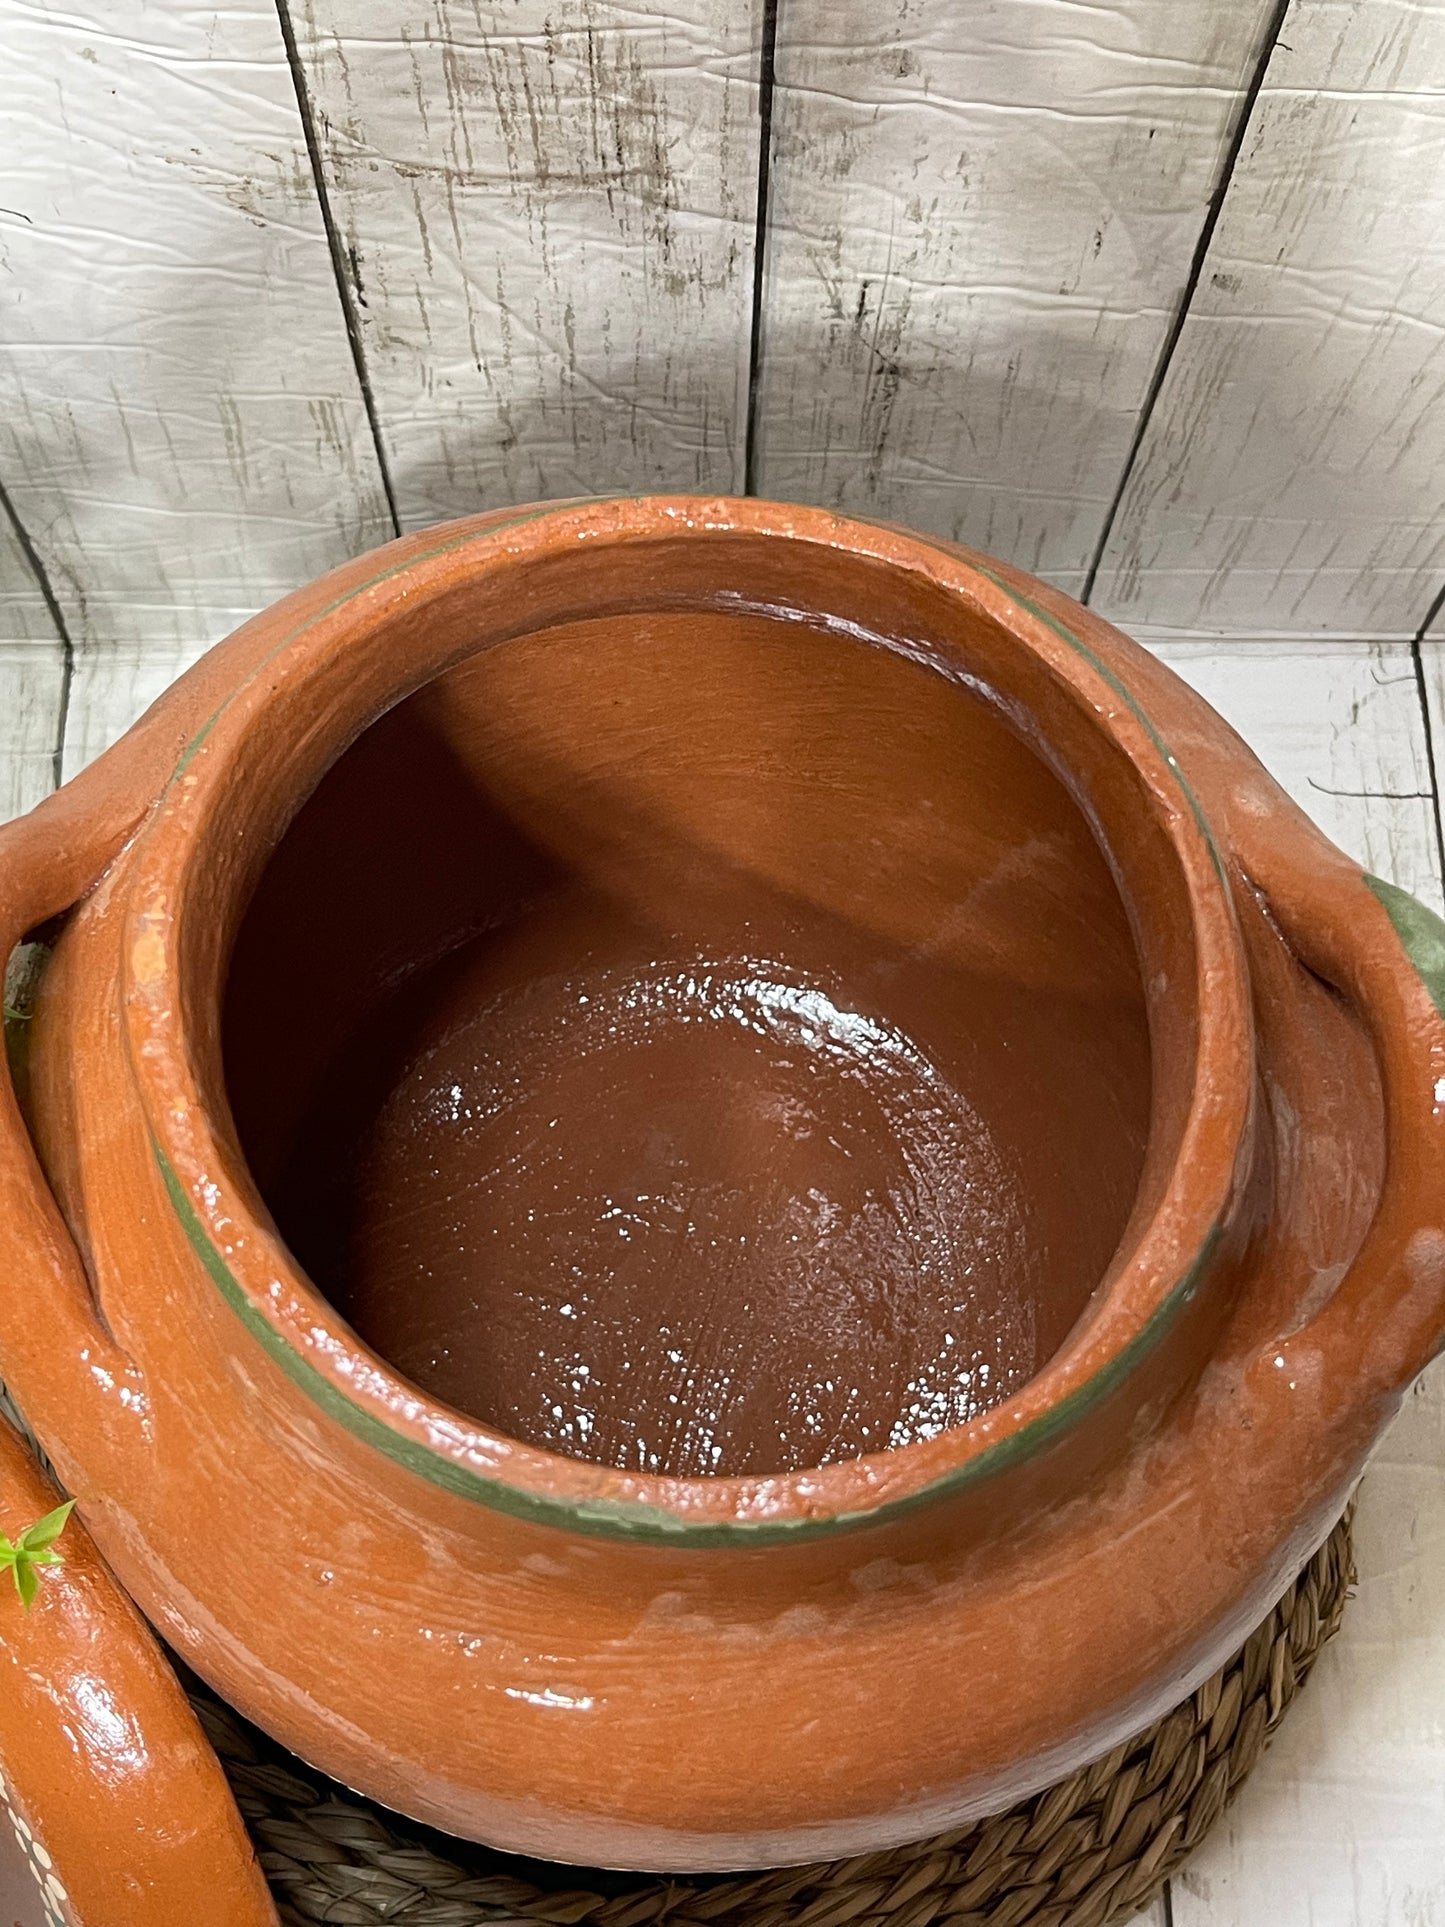 Tonala, Mexico’s handmade rustic vintage classic 8liter terracotta bean pot/olla frijolera de barro 8litros